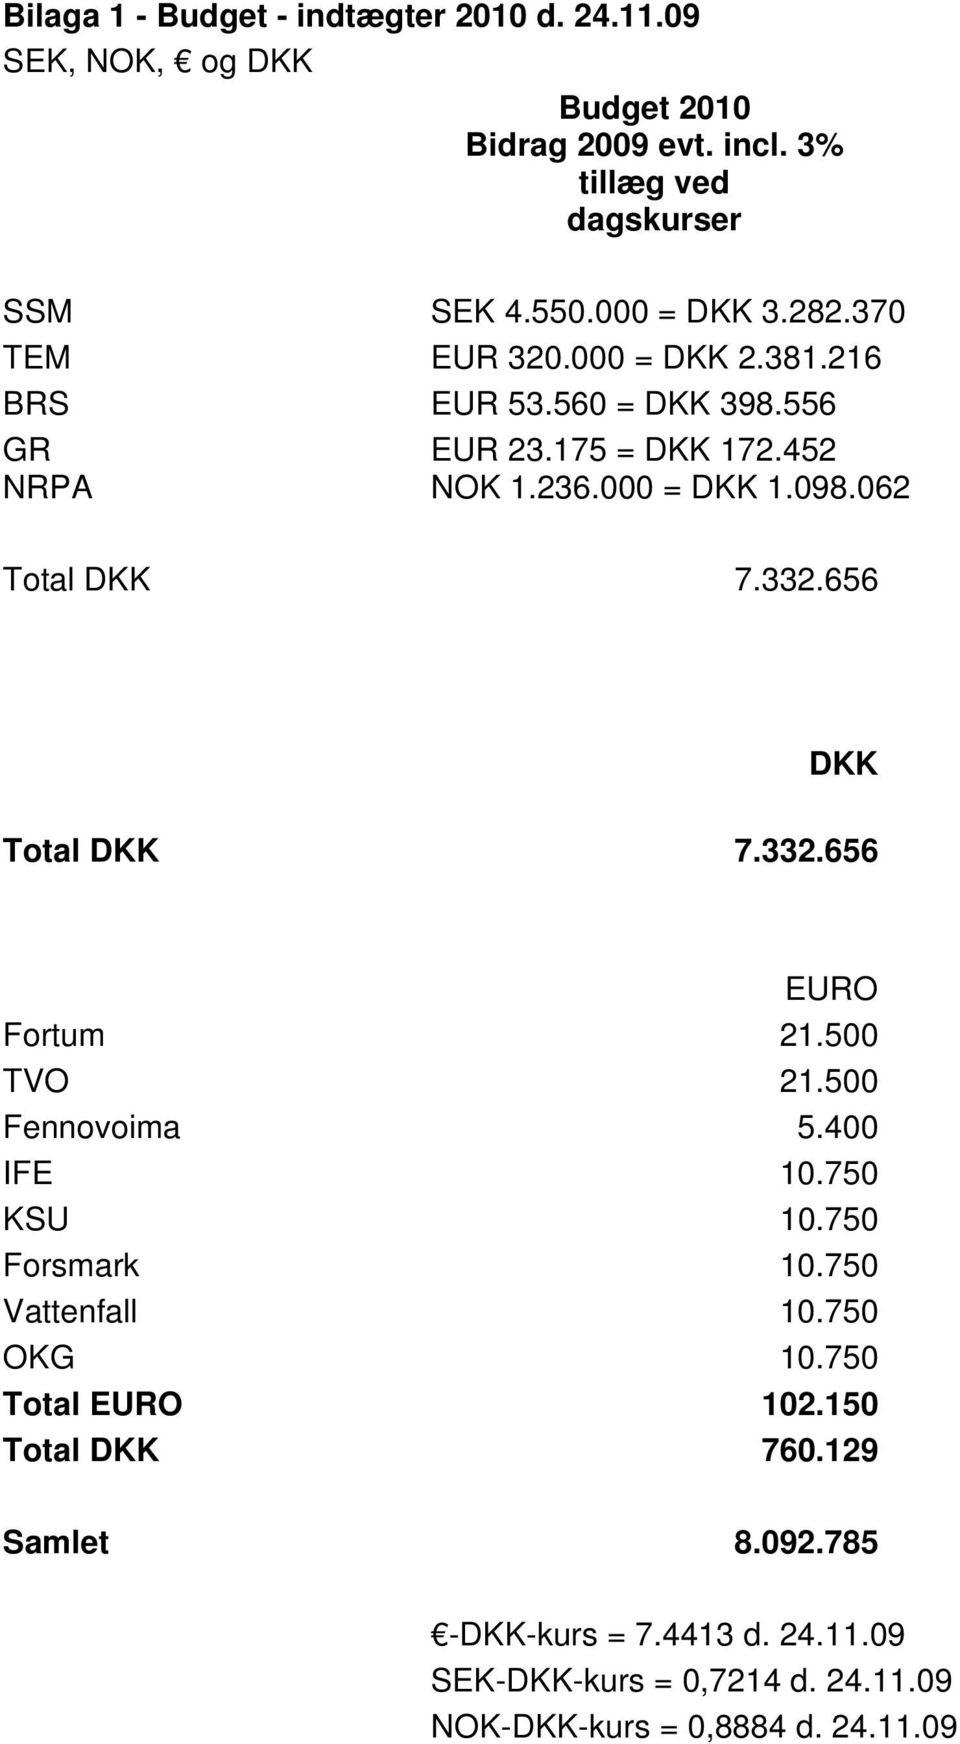 062 Total DKK 7.332.656 DKK Total DKK 7.332.656 EURO Fortum 21.500 TVO 21.500 Fennovoima 5.400 IFE 10.750 KSU 10.750 Forsmark 10.750 Vattenfall 10.